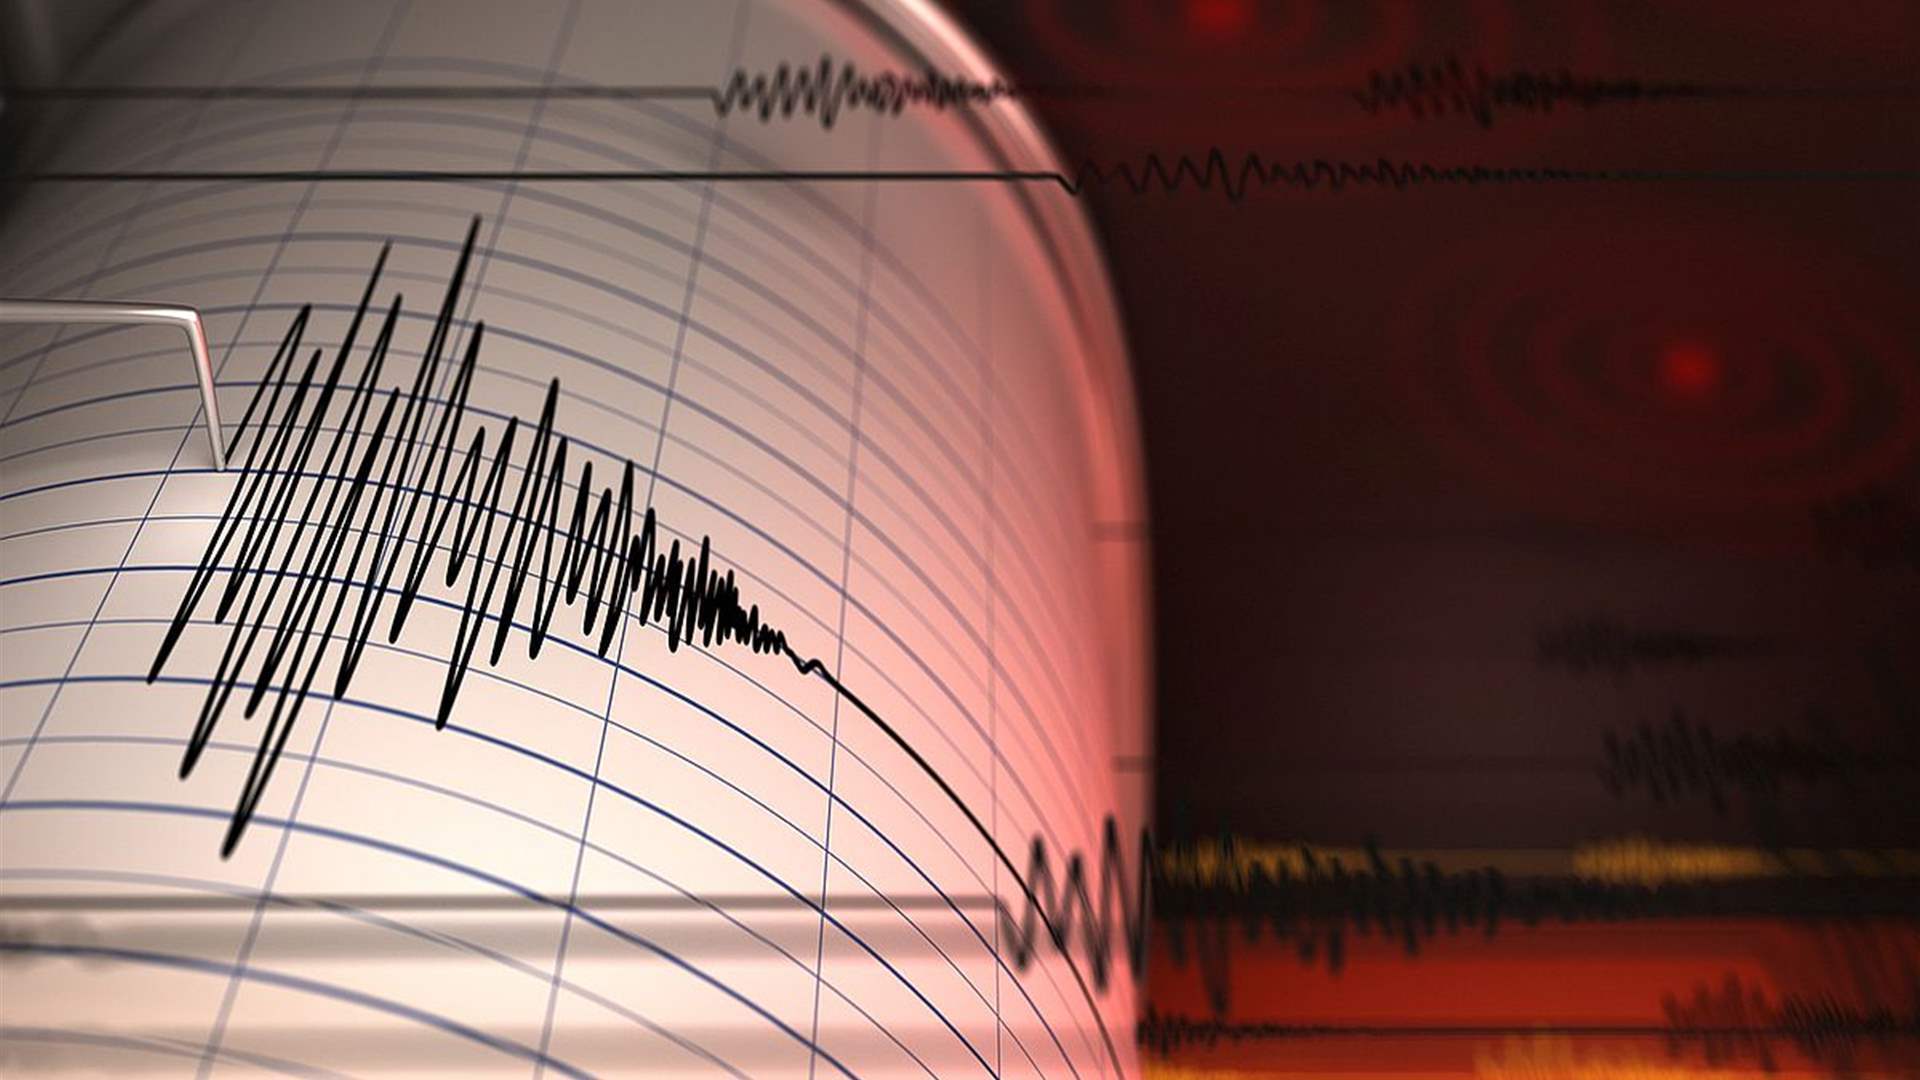 7.2 magnitude earthquake strikes off Peru, tsunami threat issued: USGS